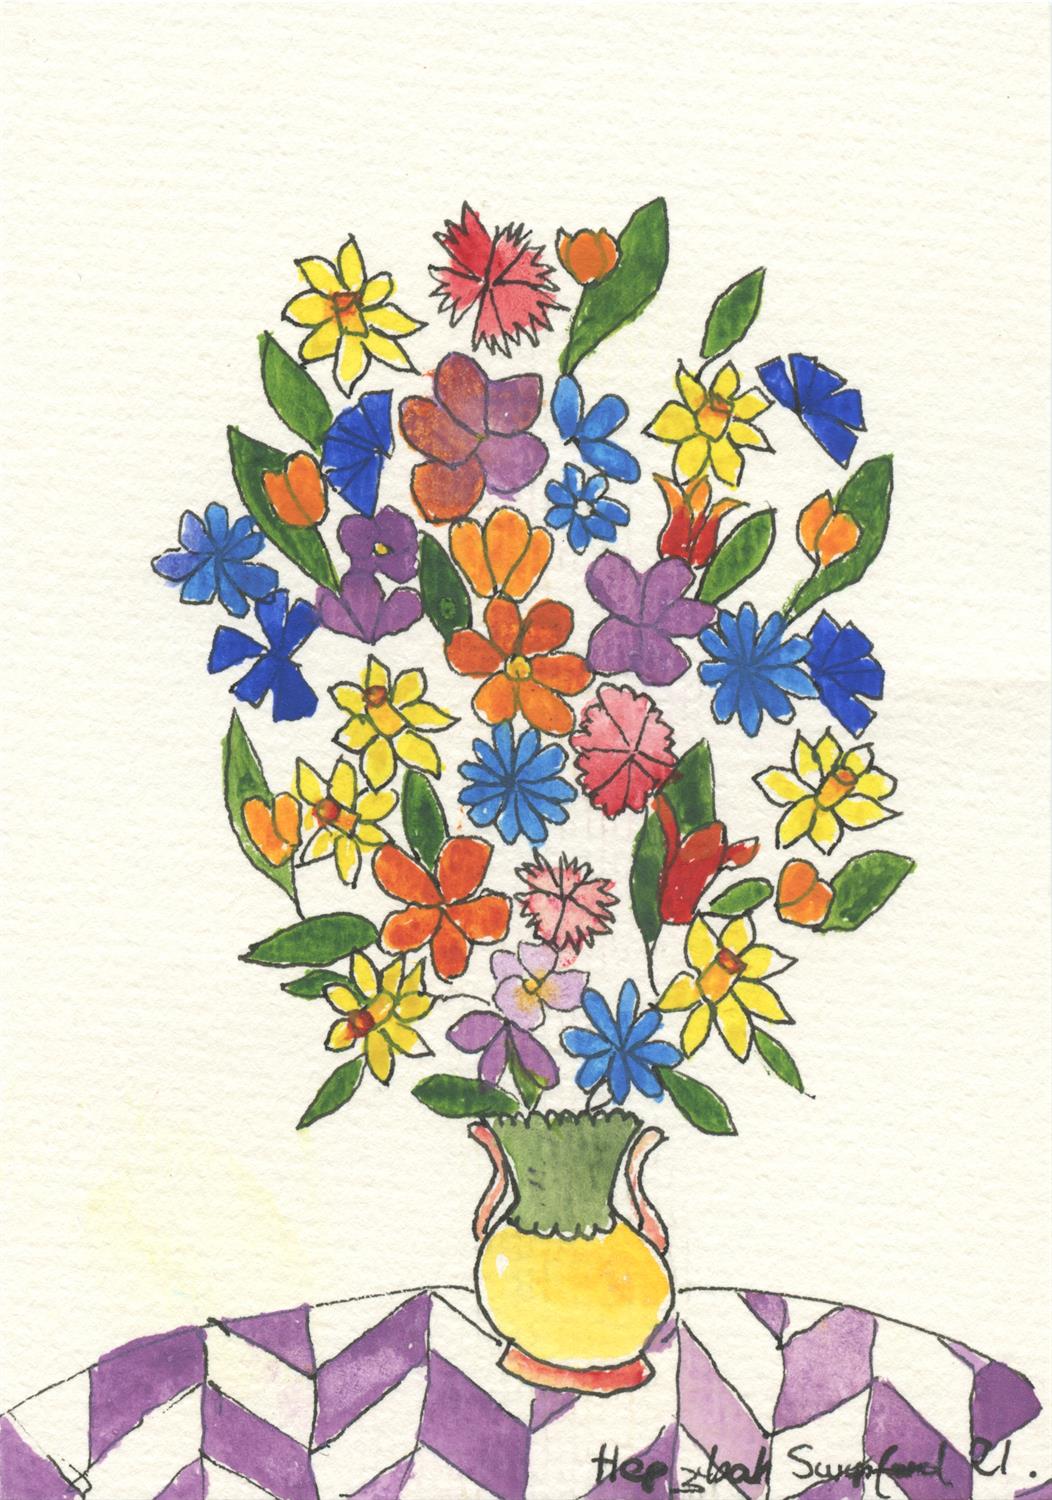 Hepzibah Swinford, Flowers with Chevrons, 2021